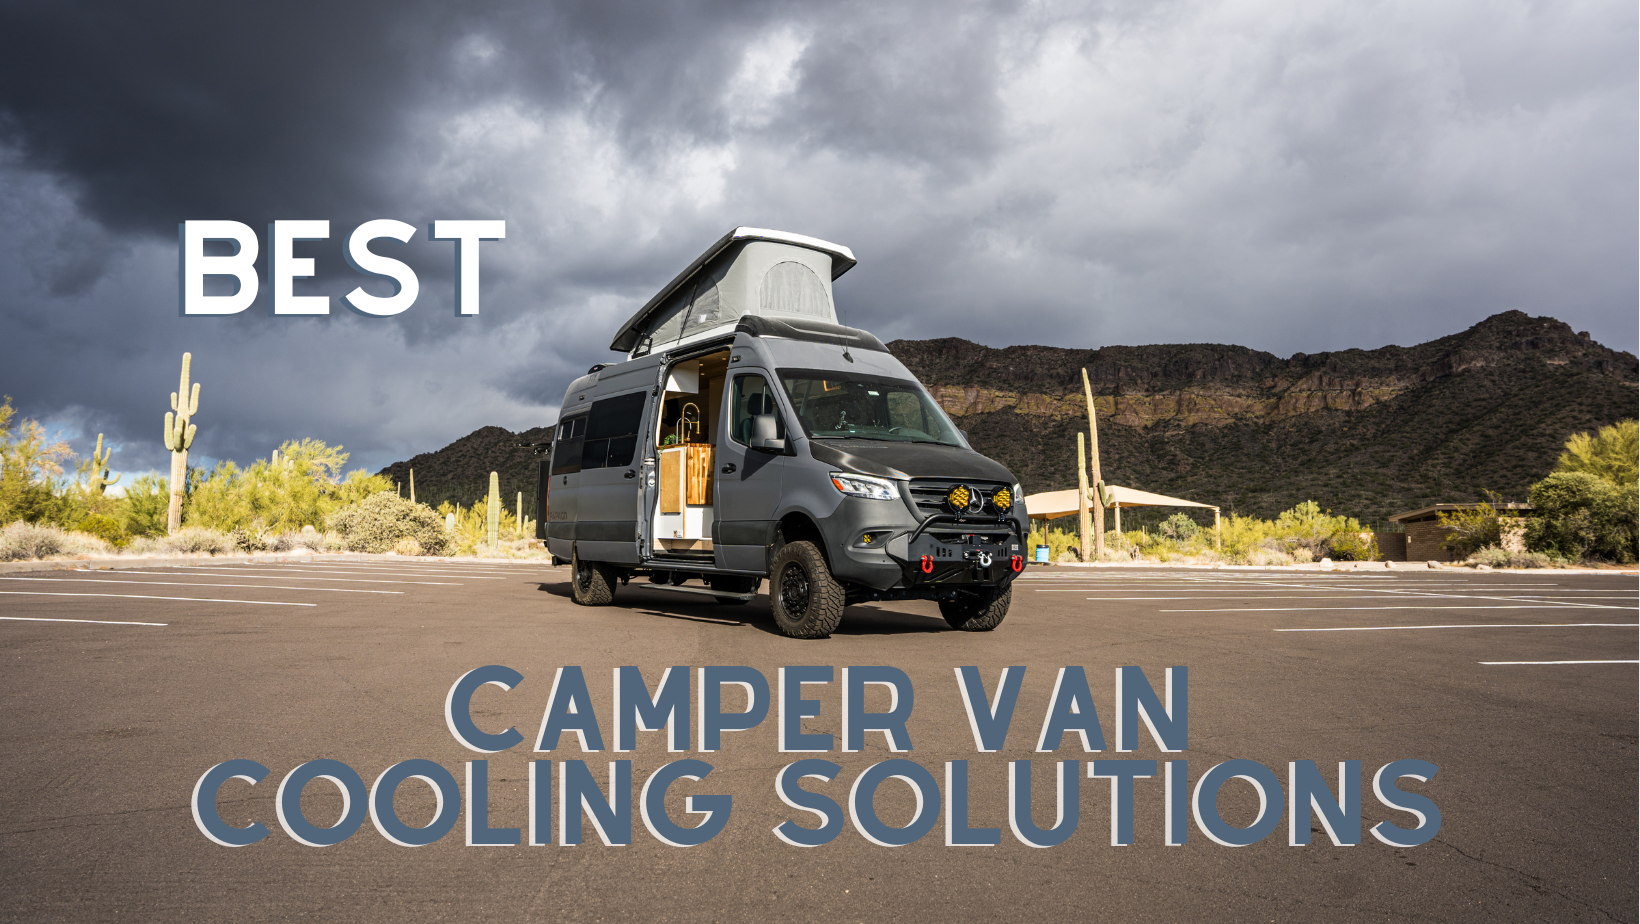 Best Camper van Cooling Solutions